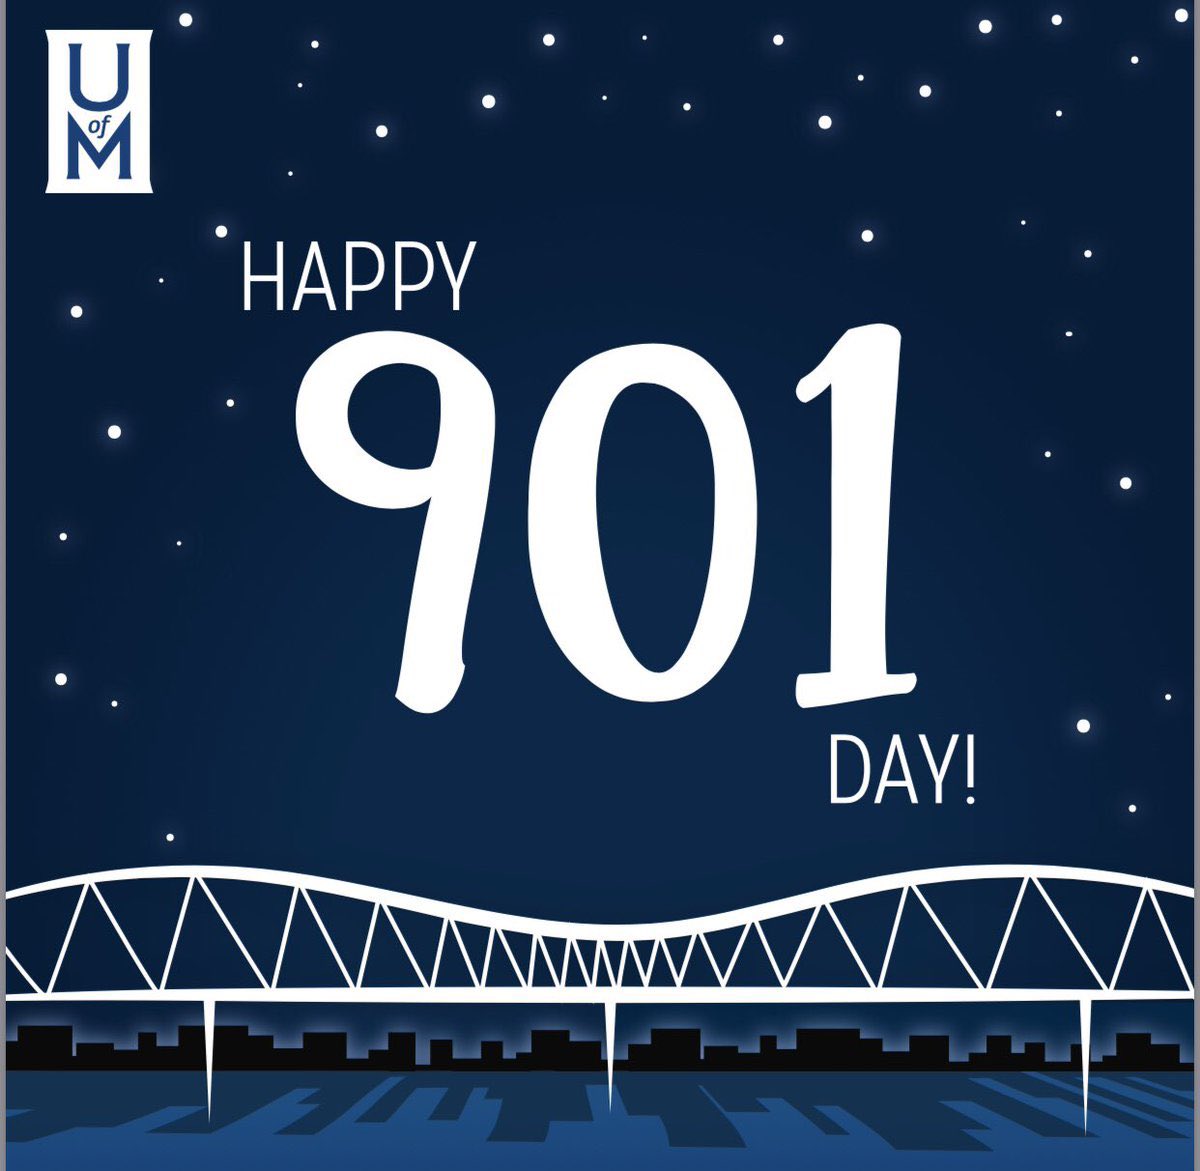 Happy 901 Day, friends! 

#901Day #GoTigersGo #MemphisRising